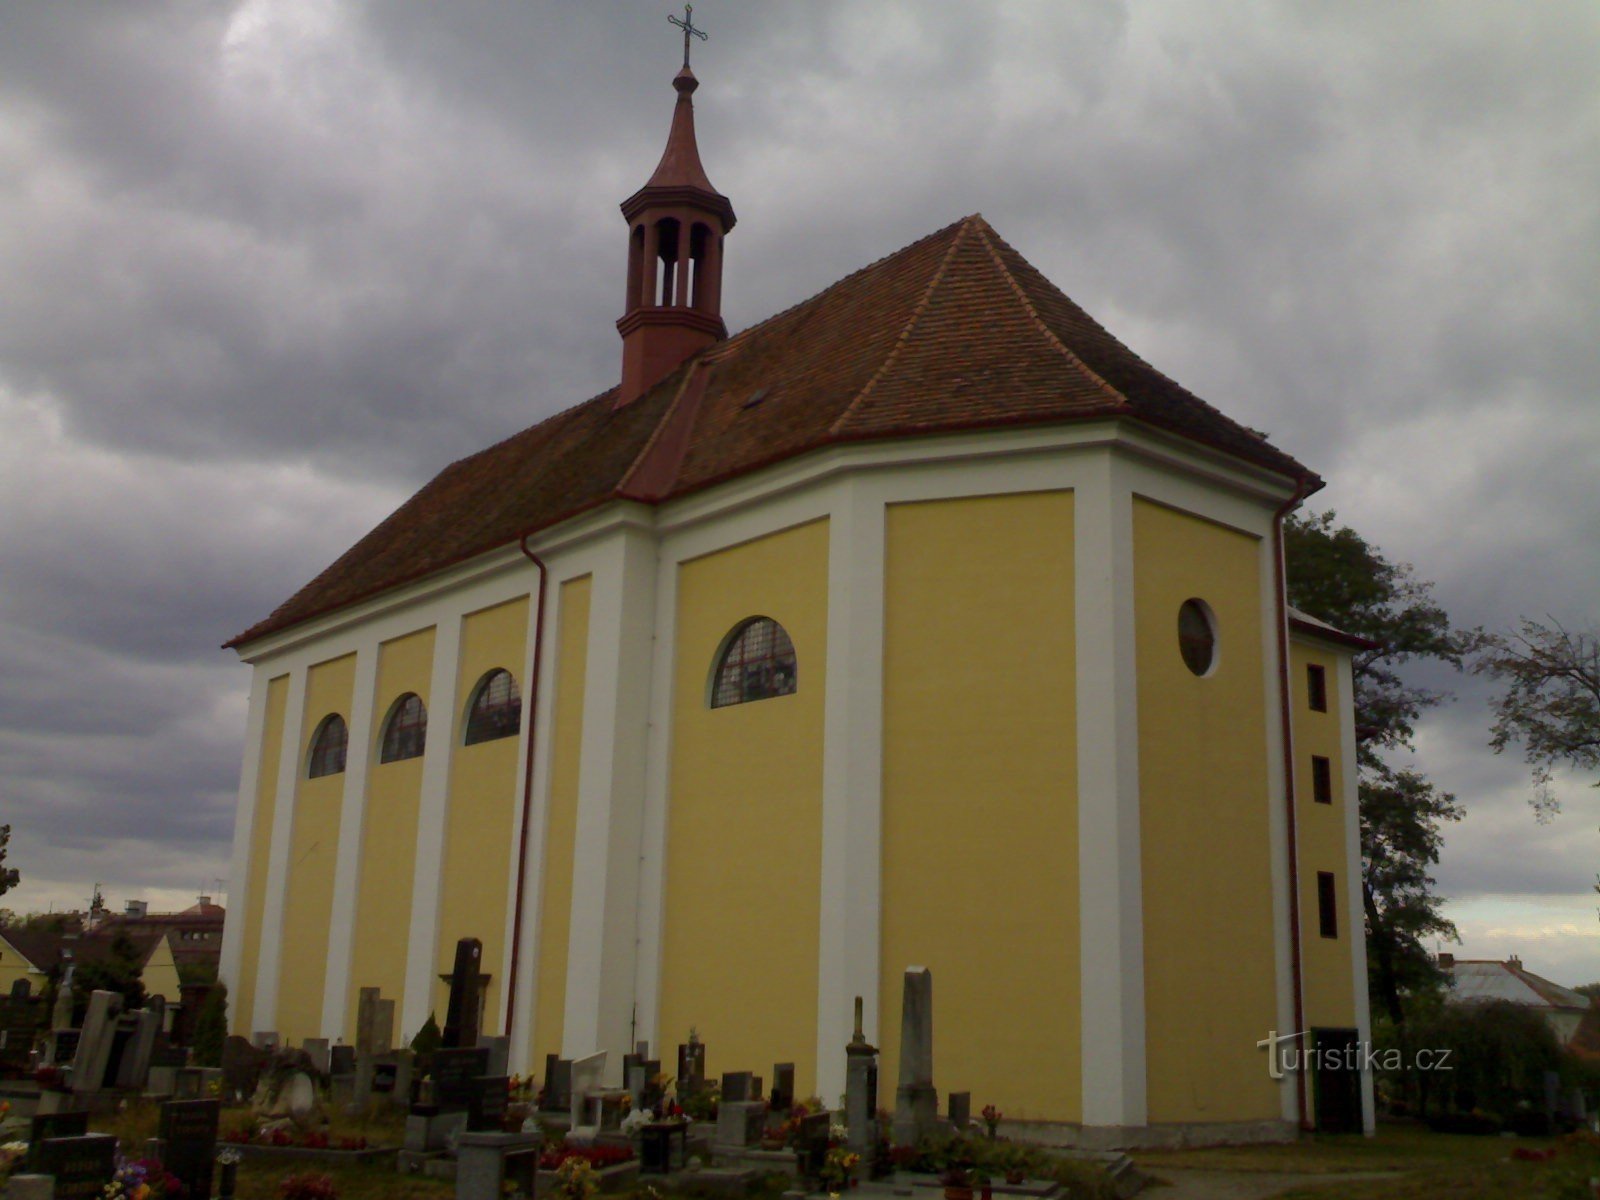 Borohrádek - crkva sv. Mihovila arkanđela